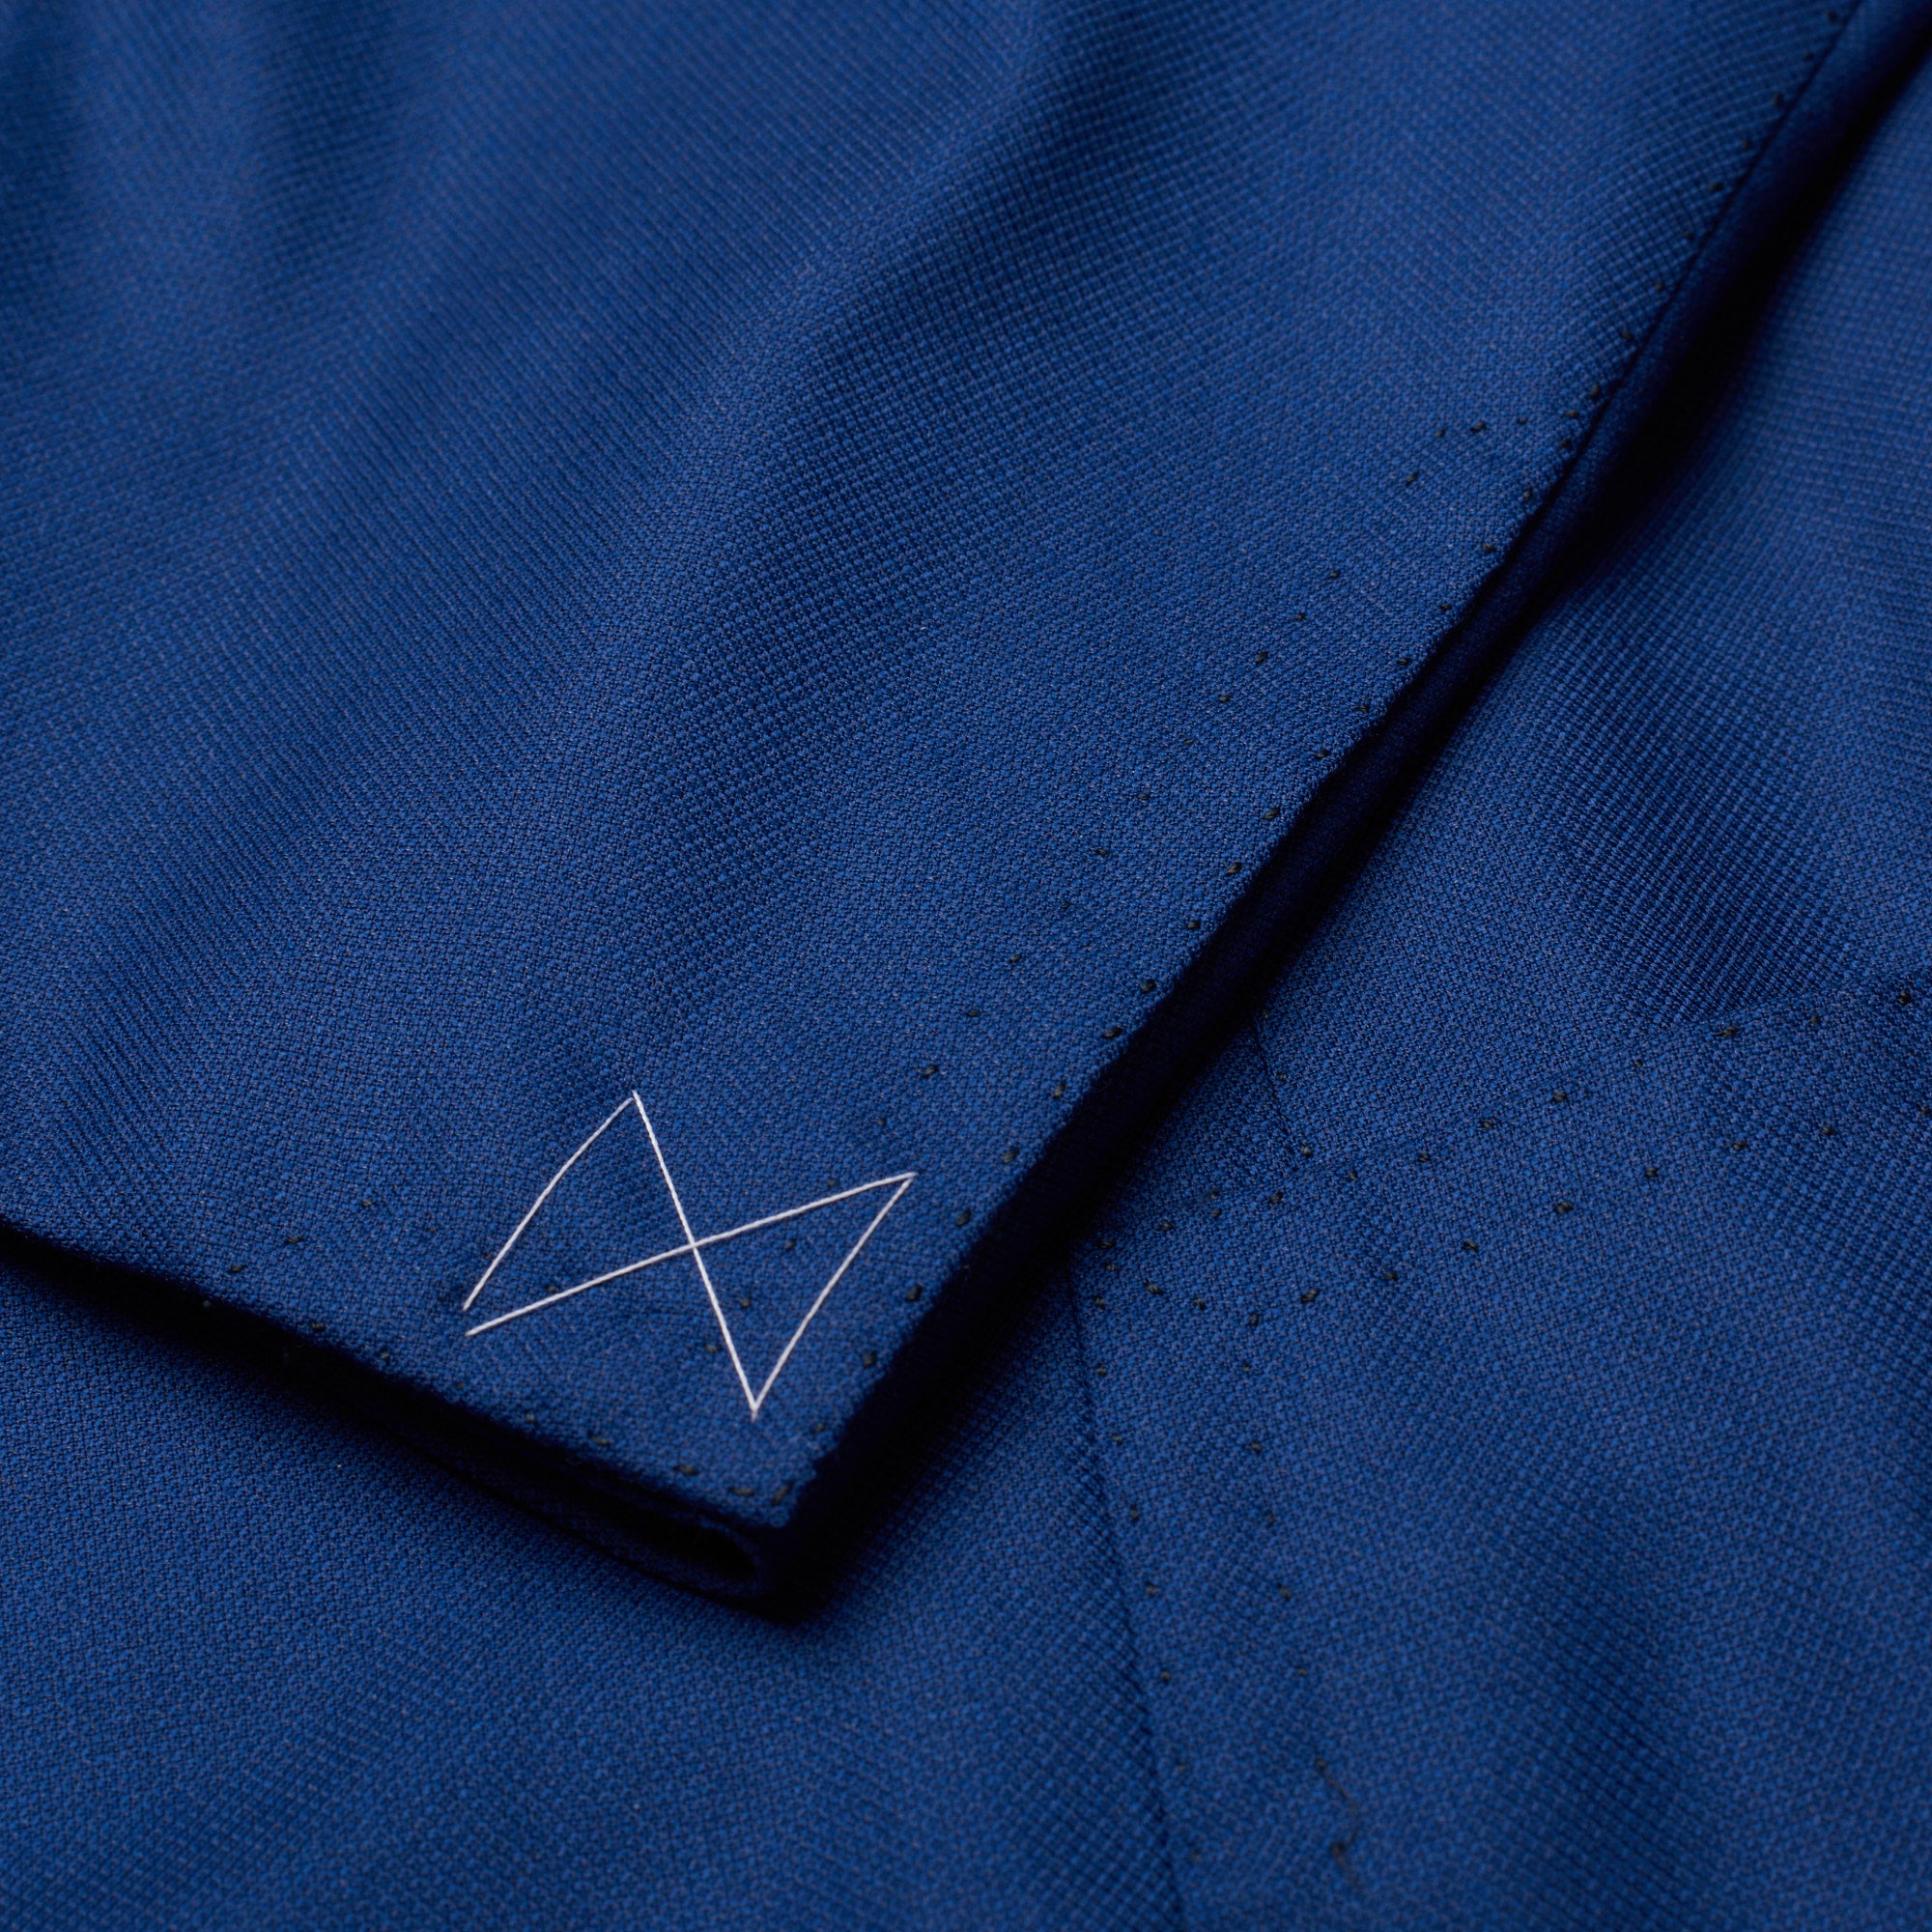 CESARE ATTOLINI Handmade Blue Silk-Wool Super 170's Jacket EU 48 NEW US 38